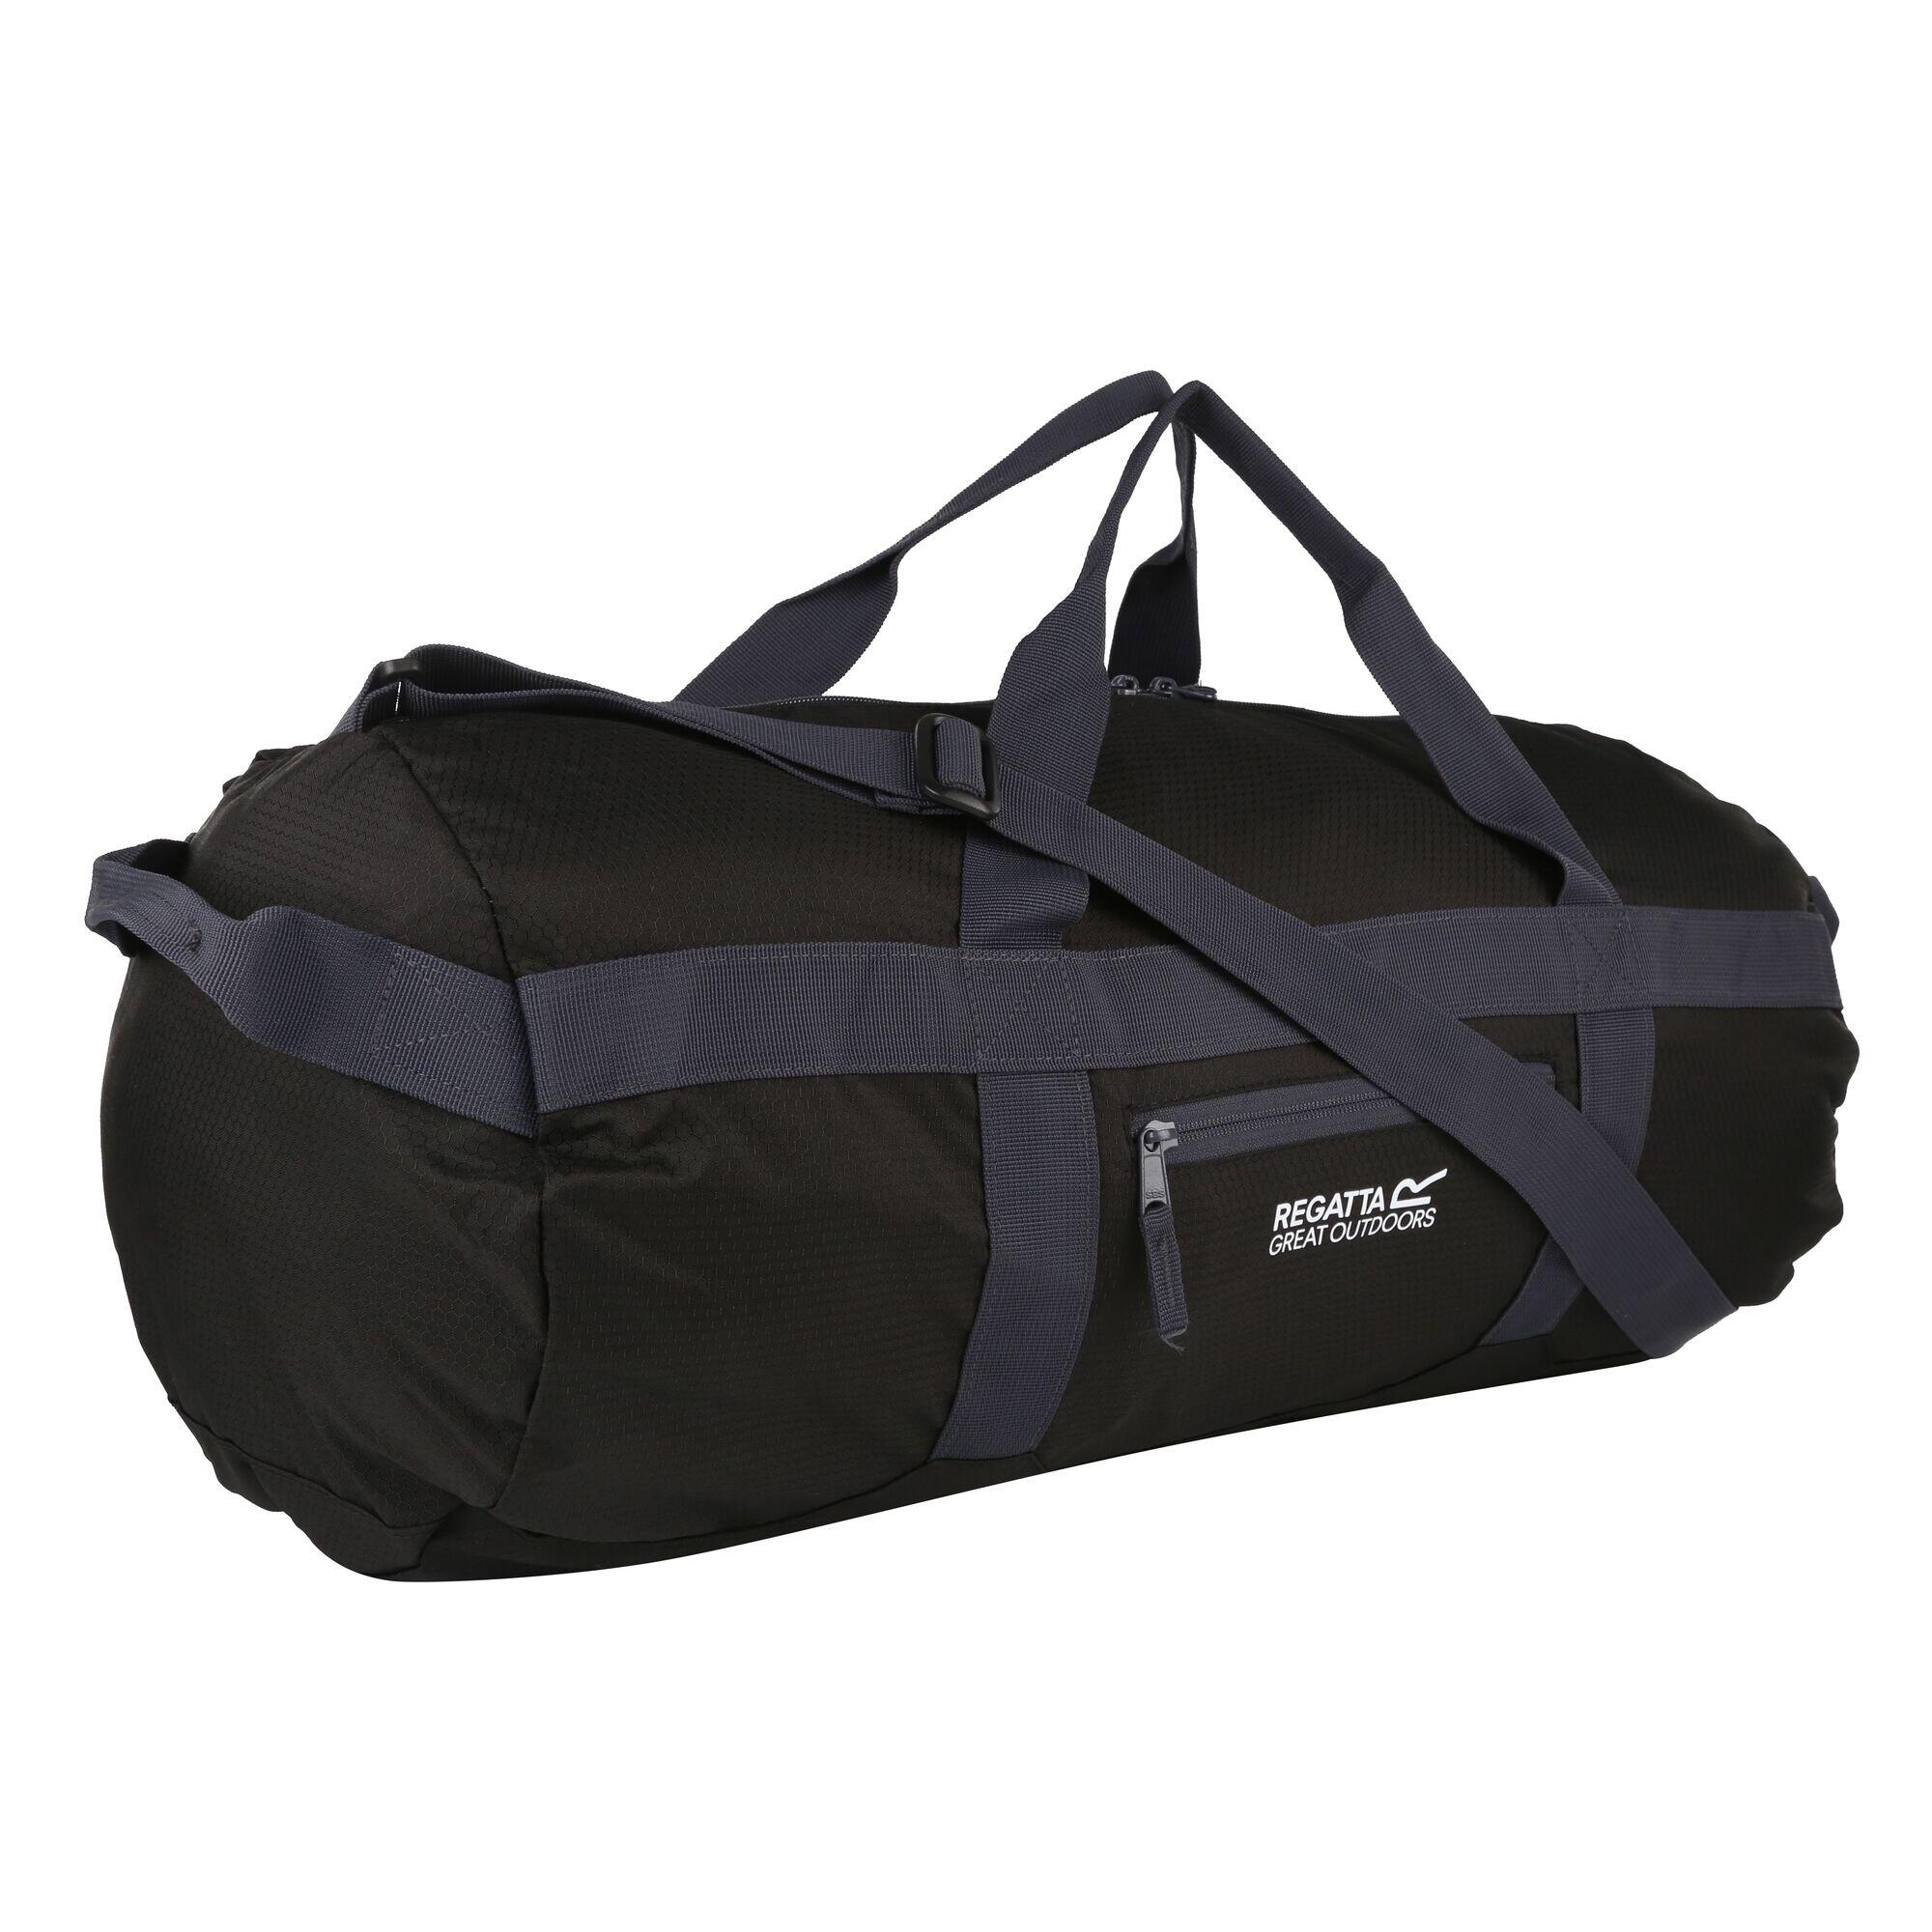 Packaway 60L Adults' Unisex Fitness Duffle Bag - Black 2/5